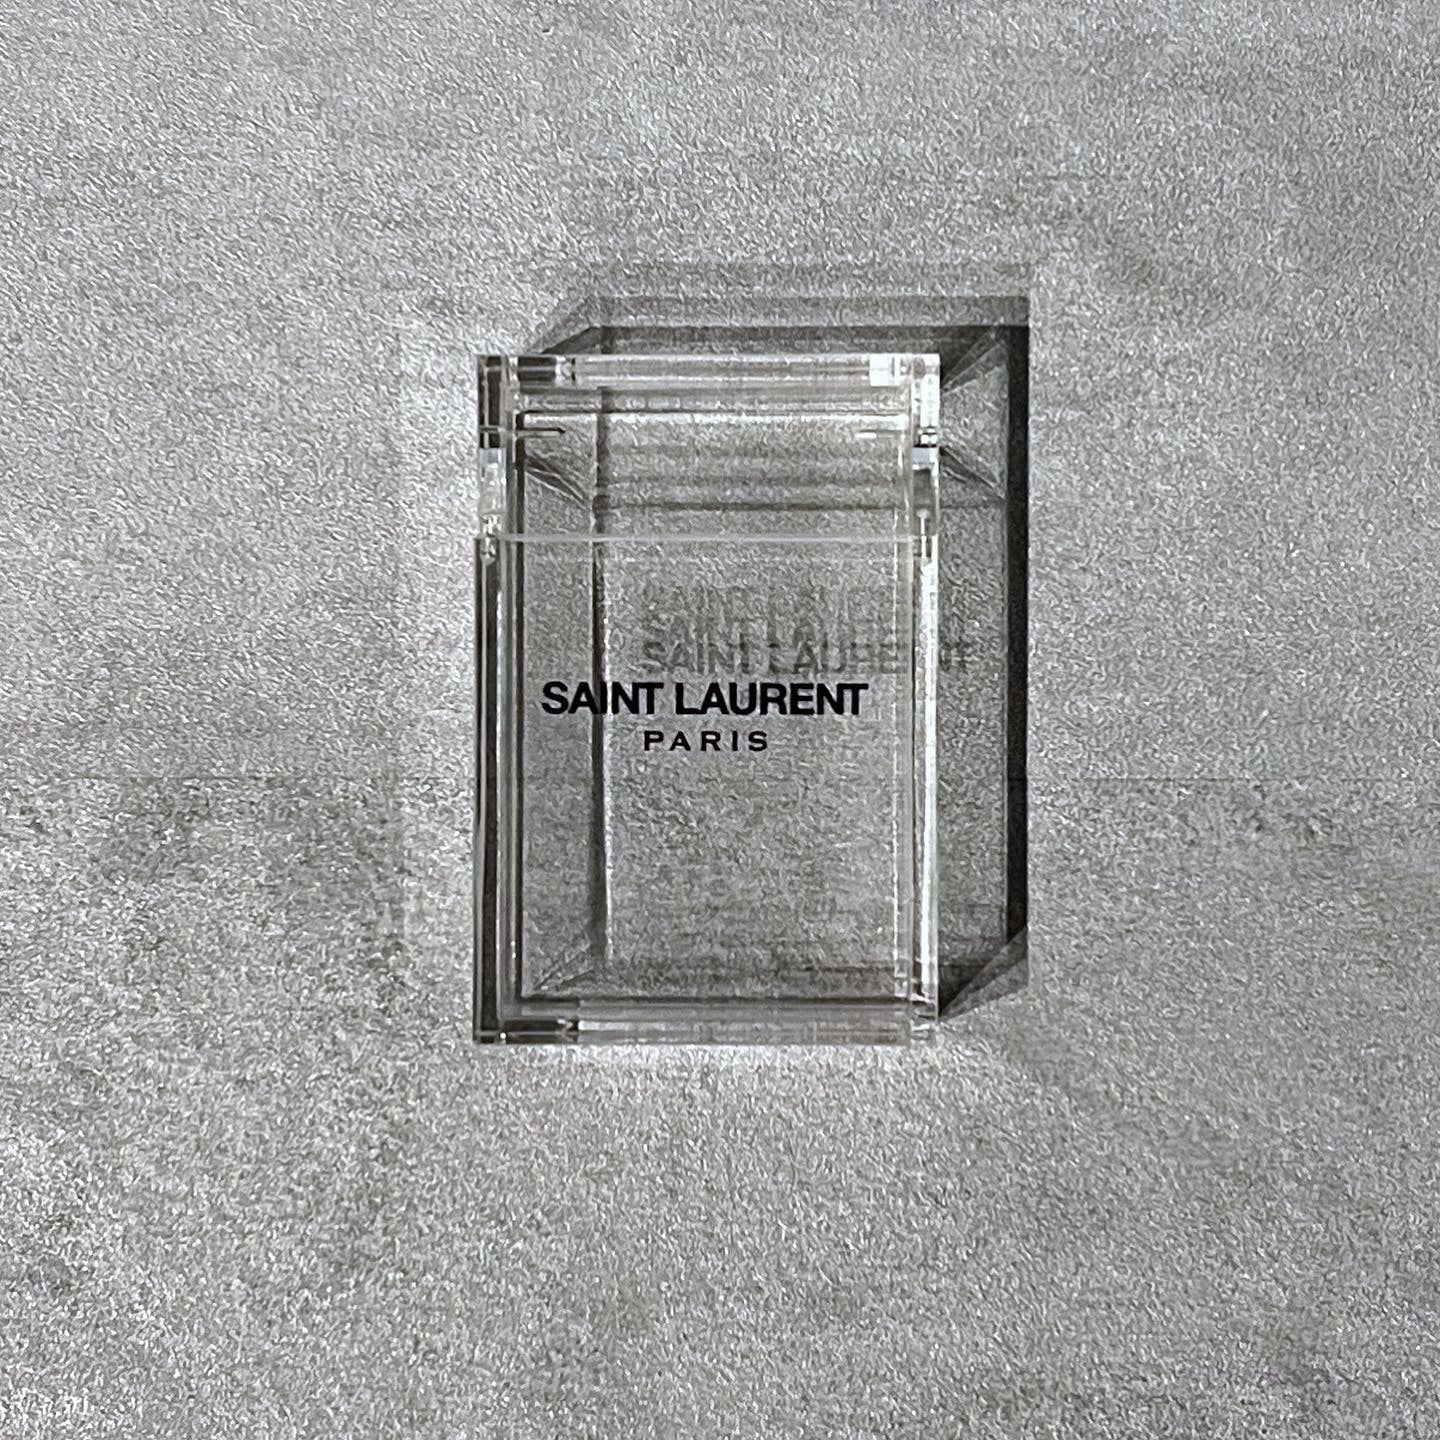 Lot 2499 - A Yves Saint Laurent cigarette holder with